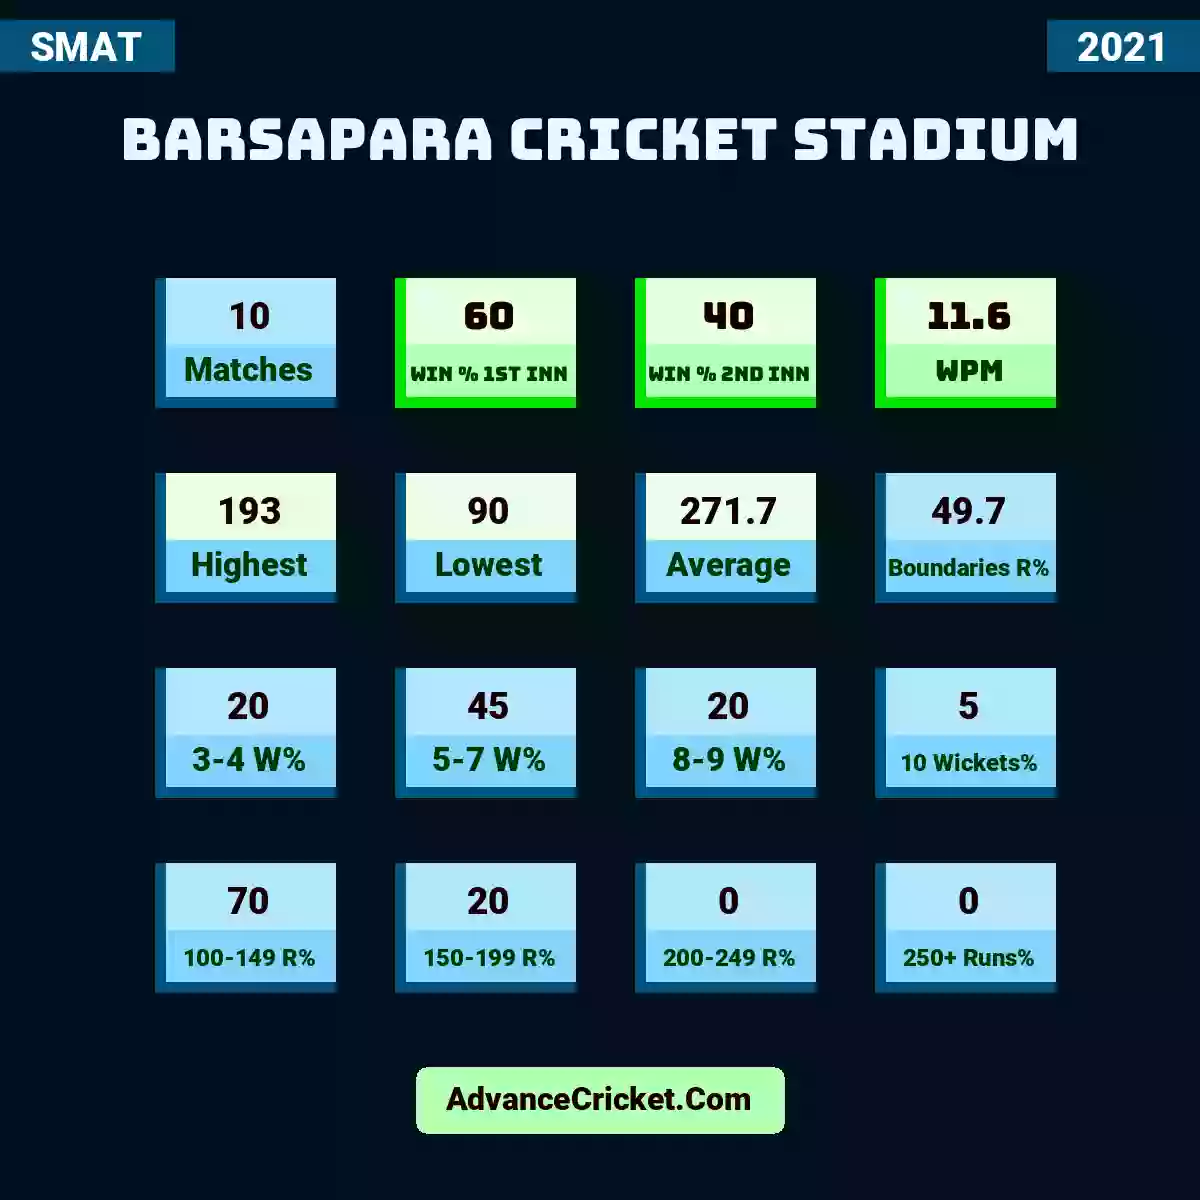 Image showing Barsapara Cricket Stadium with Matches: 10, Win % 1st Inn: 60, Win % 2nd Inn: 40, WPM: 11.6, Highest: 193, Lowest: 90, Average: 271.7, Boundaries R%: 49.7, 3-4 W%: 20, 5-7 W%: 45, 8-9 W%: 20, 10 Wickets%: 5, 100-149 R%: 70, 150-199 R%: 20, 200-249 R%: 0, 250+ Runs%: 0.